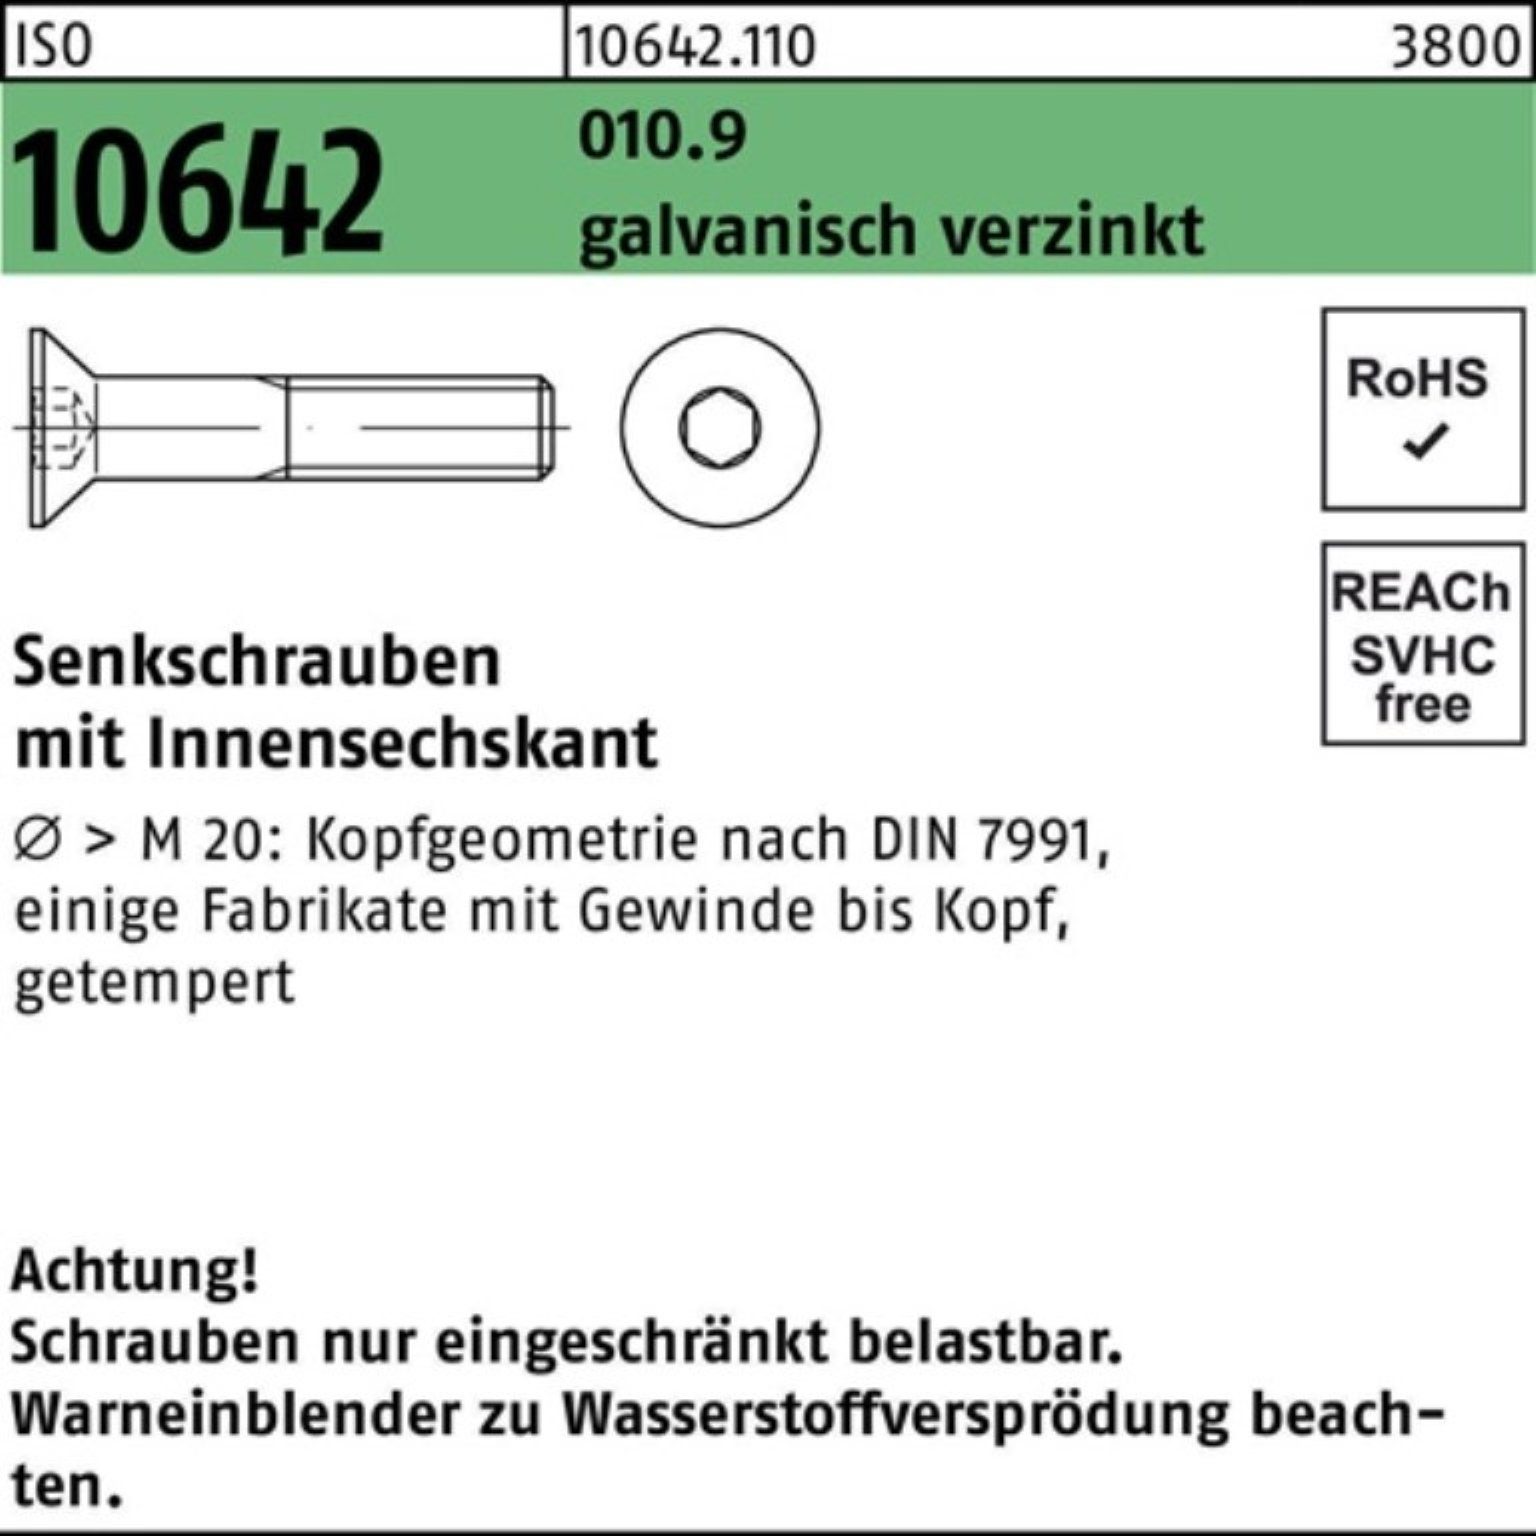 Reyher Senkschraube 500er Pack Senkschraube ISO 10642 Innen-6kt M3x 16 010.9 galv.verz. 50